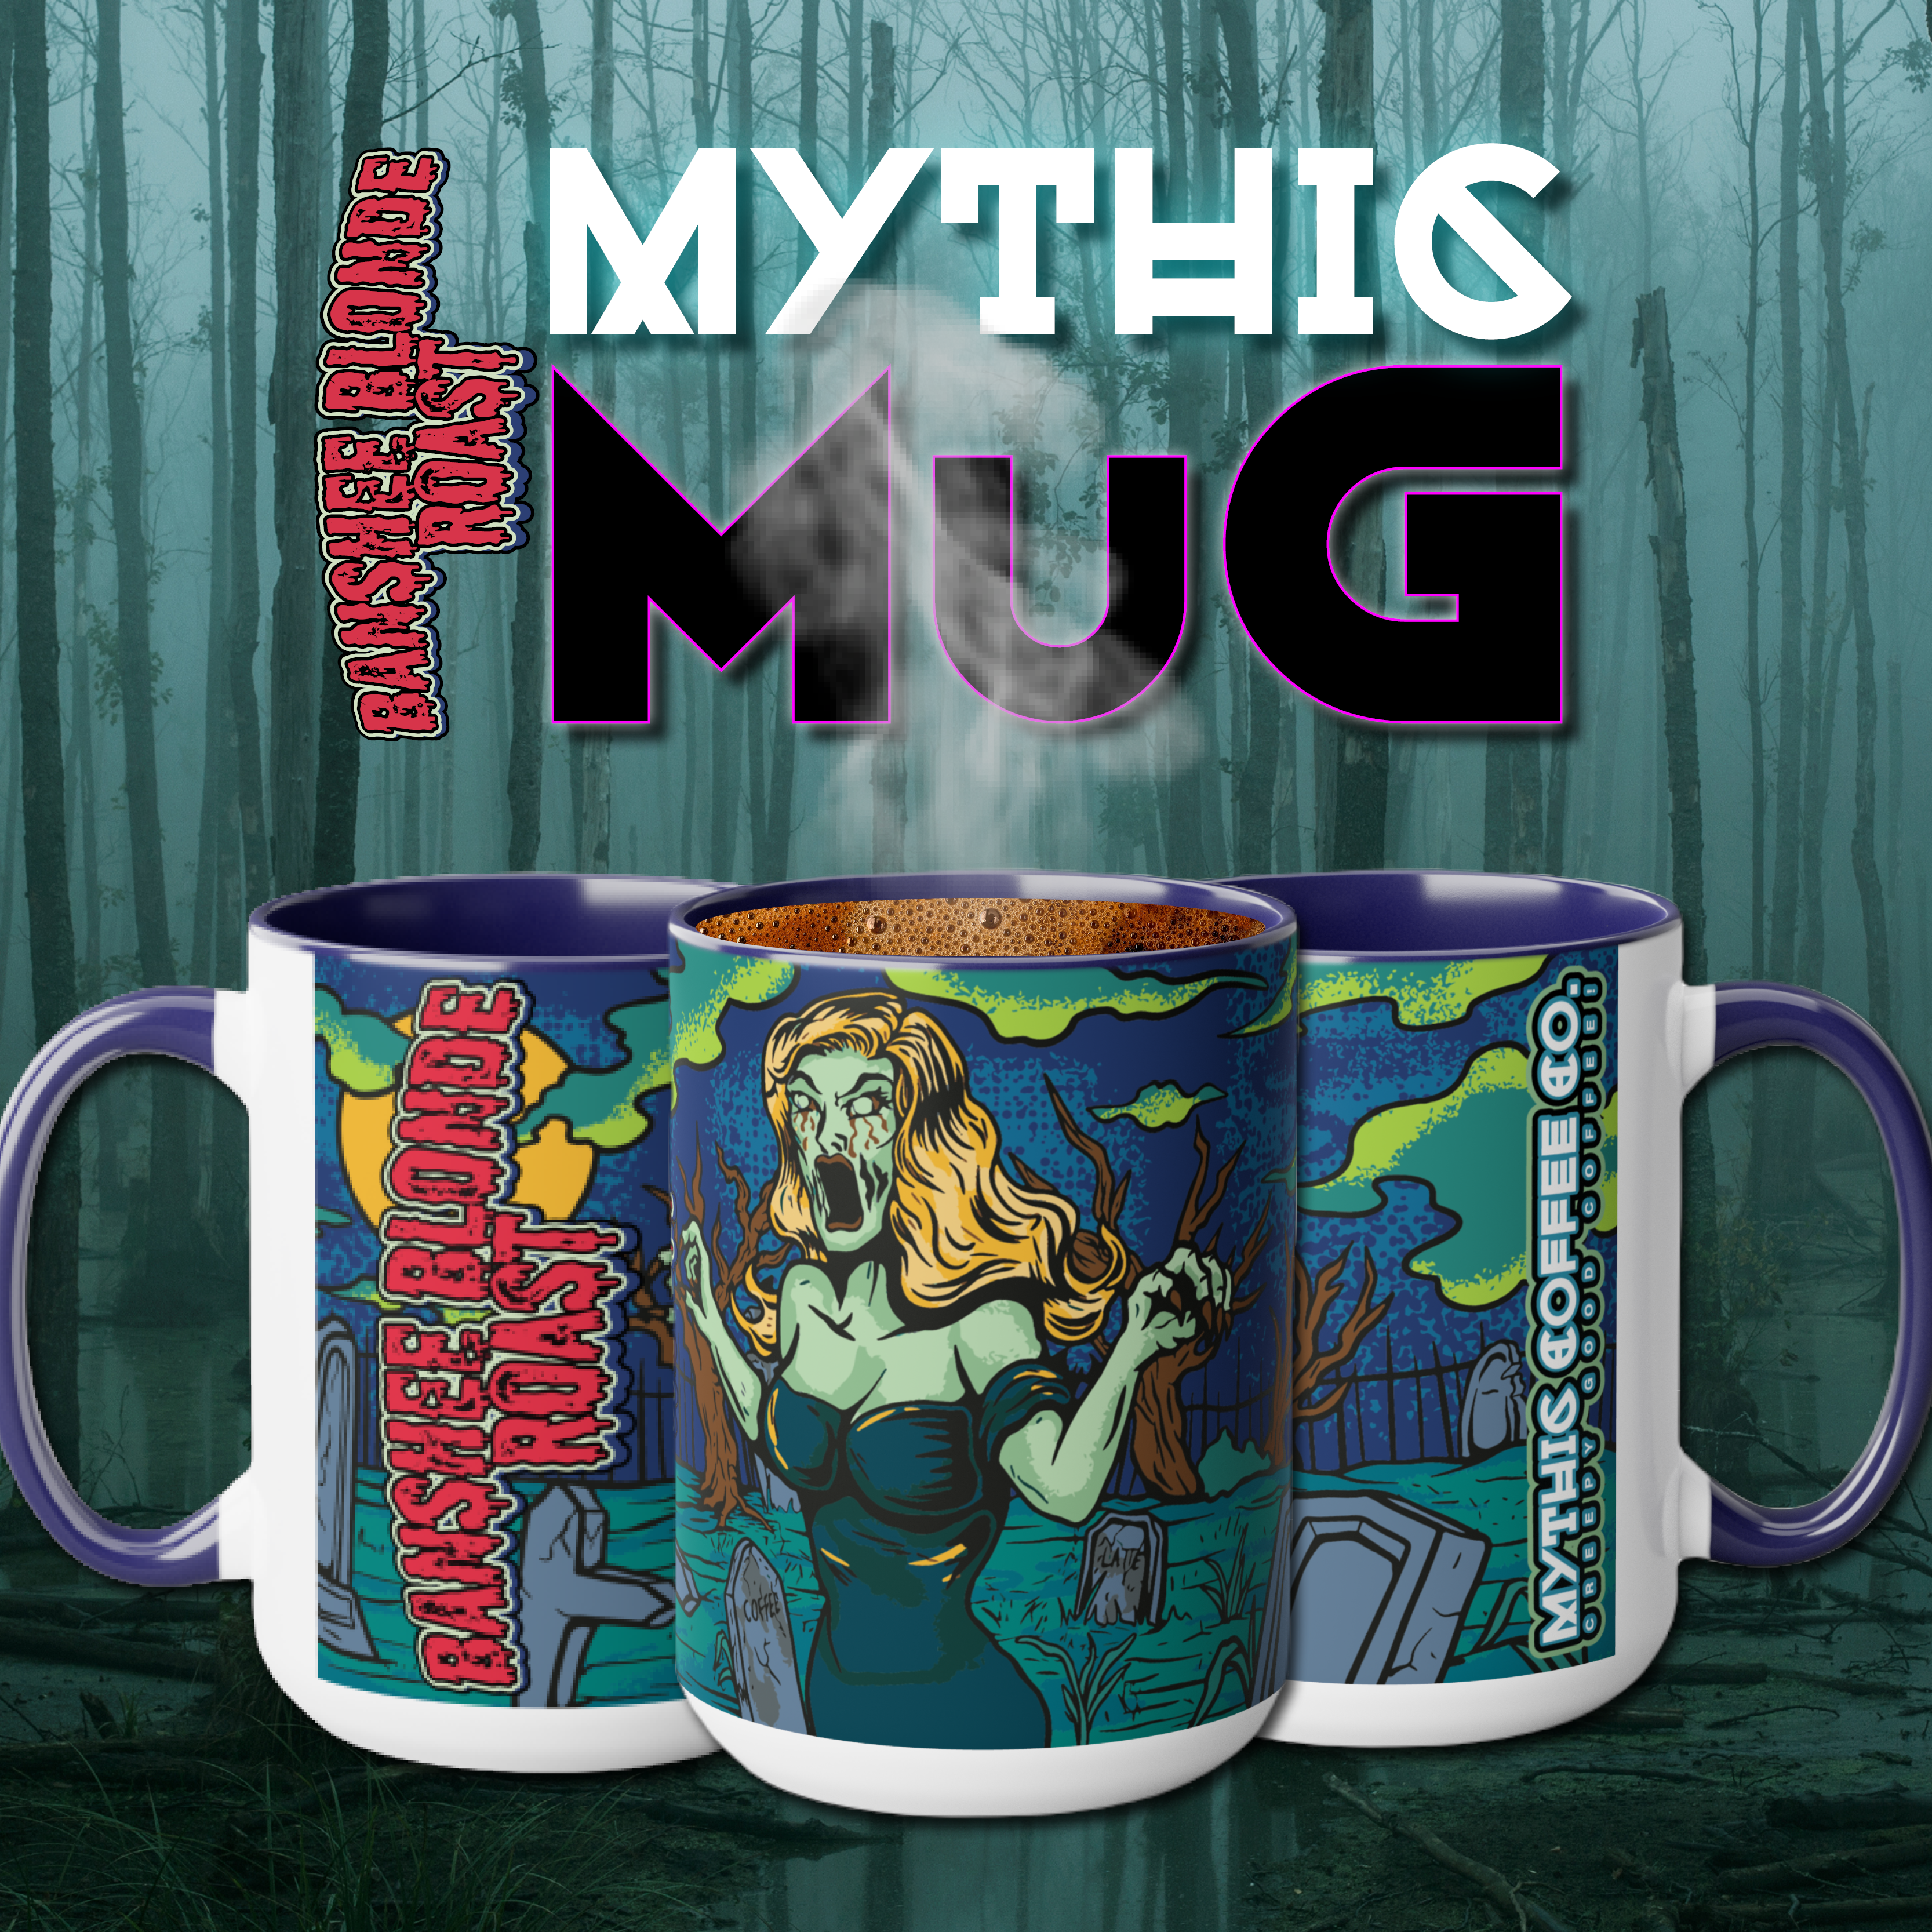 Guild Mugs - Mega Demondrug Coffee Mug for Sale by bleachedink